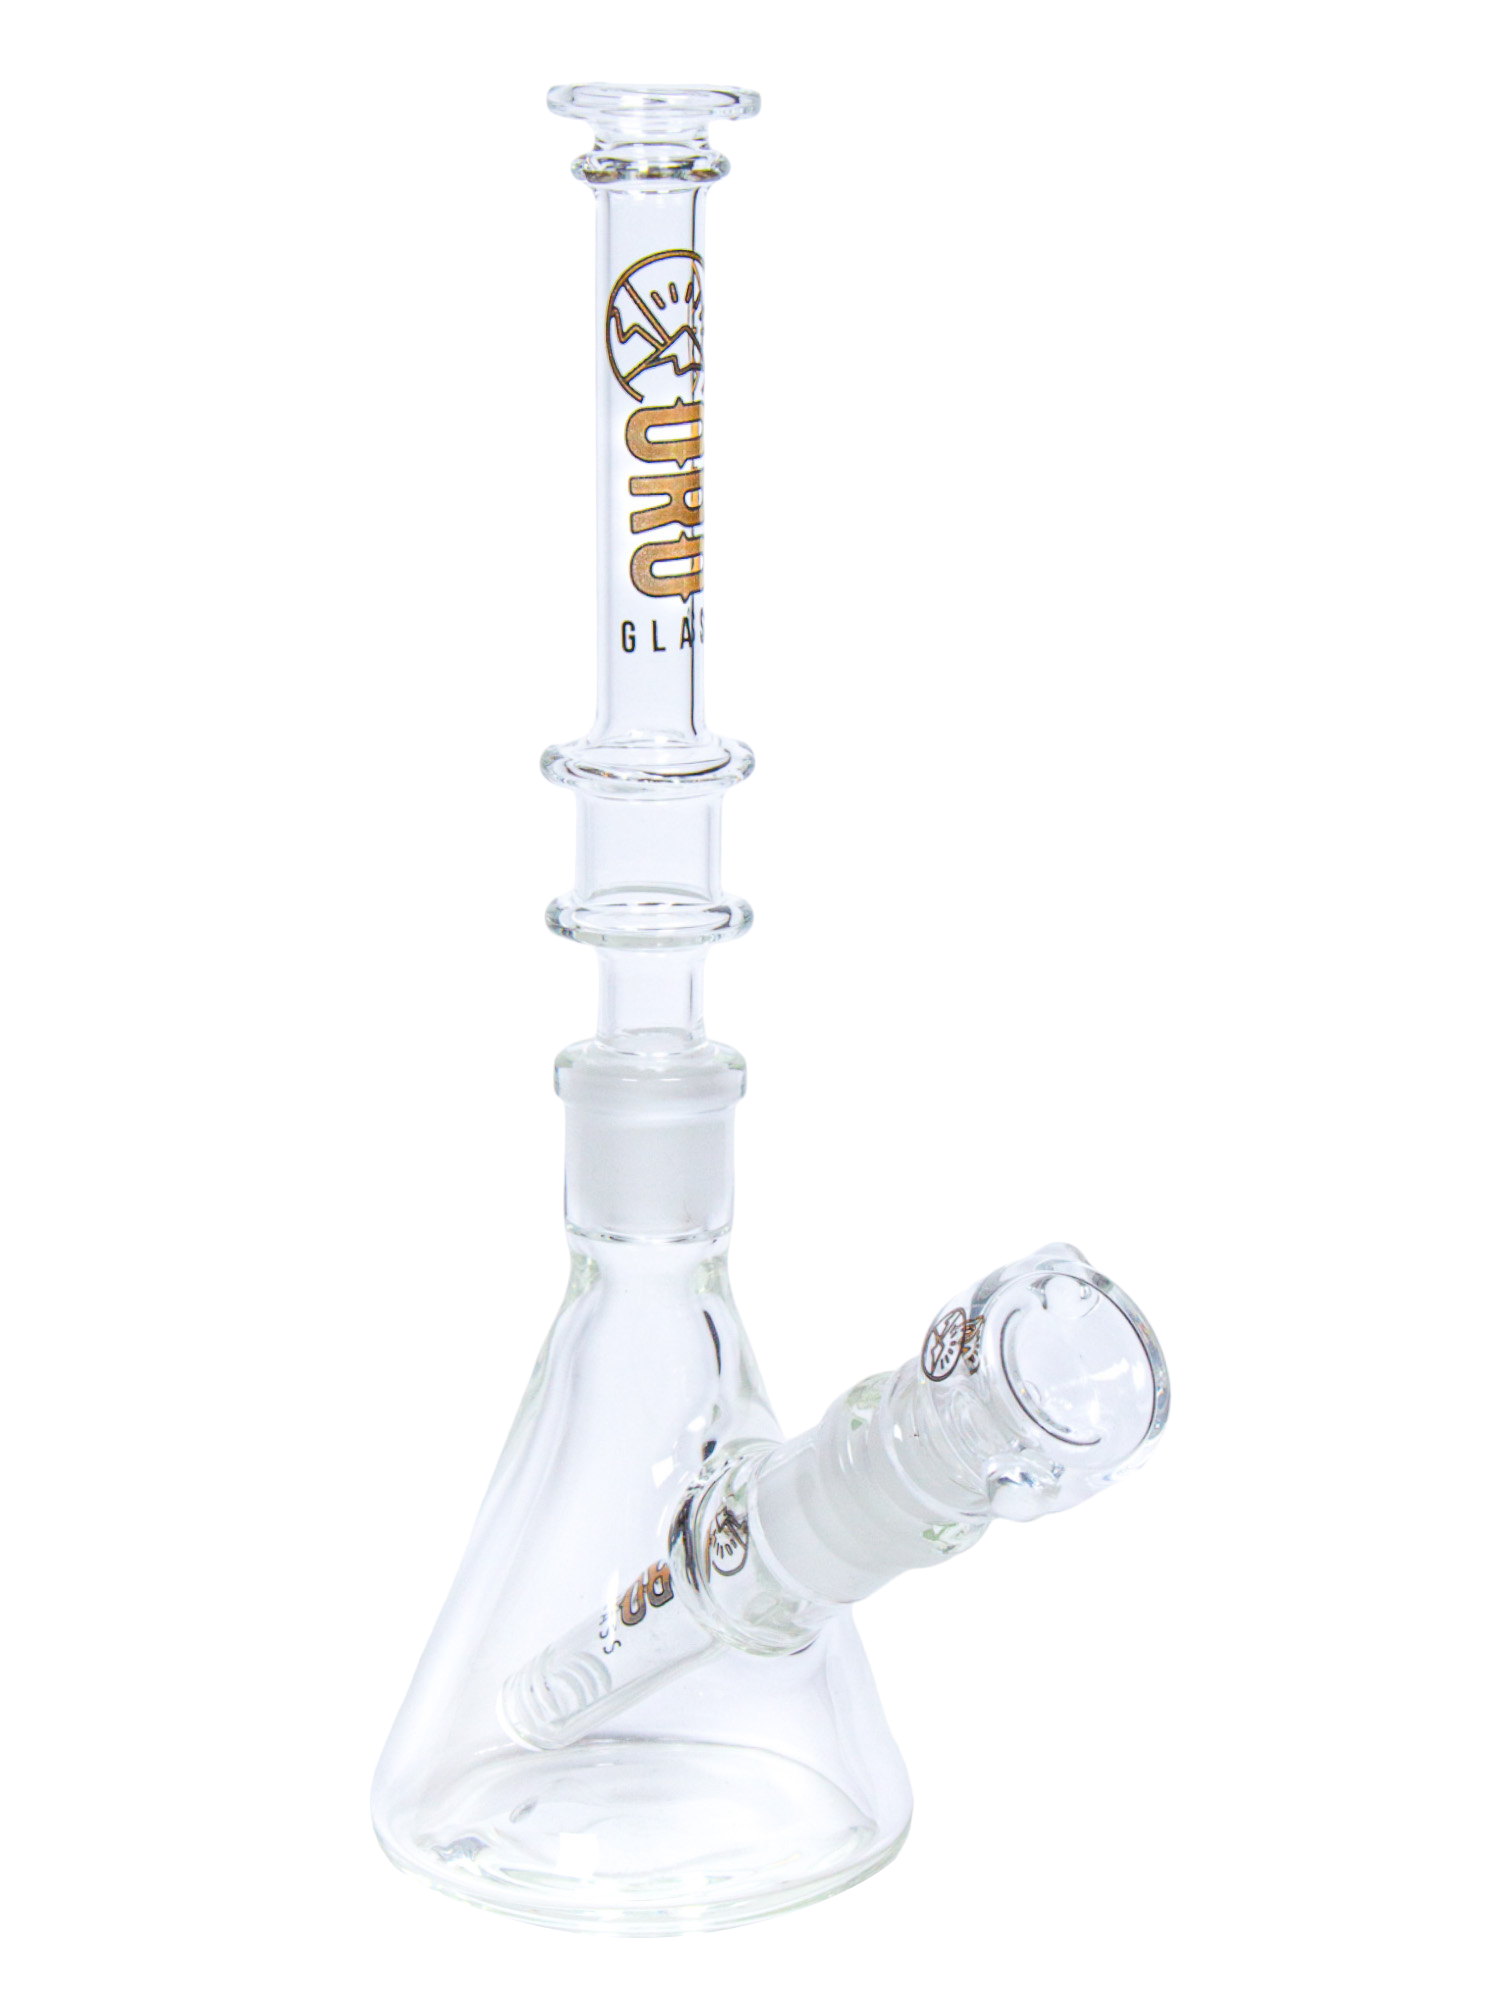 An Oro Glass Company Highbanker Modular Water Pipe set up as a beaker.